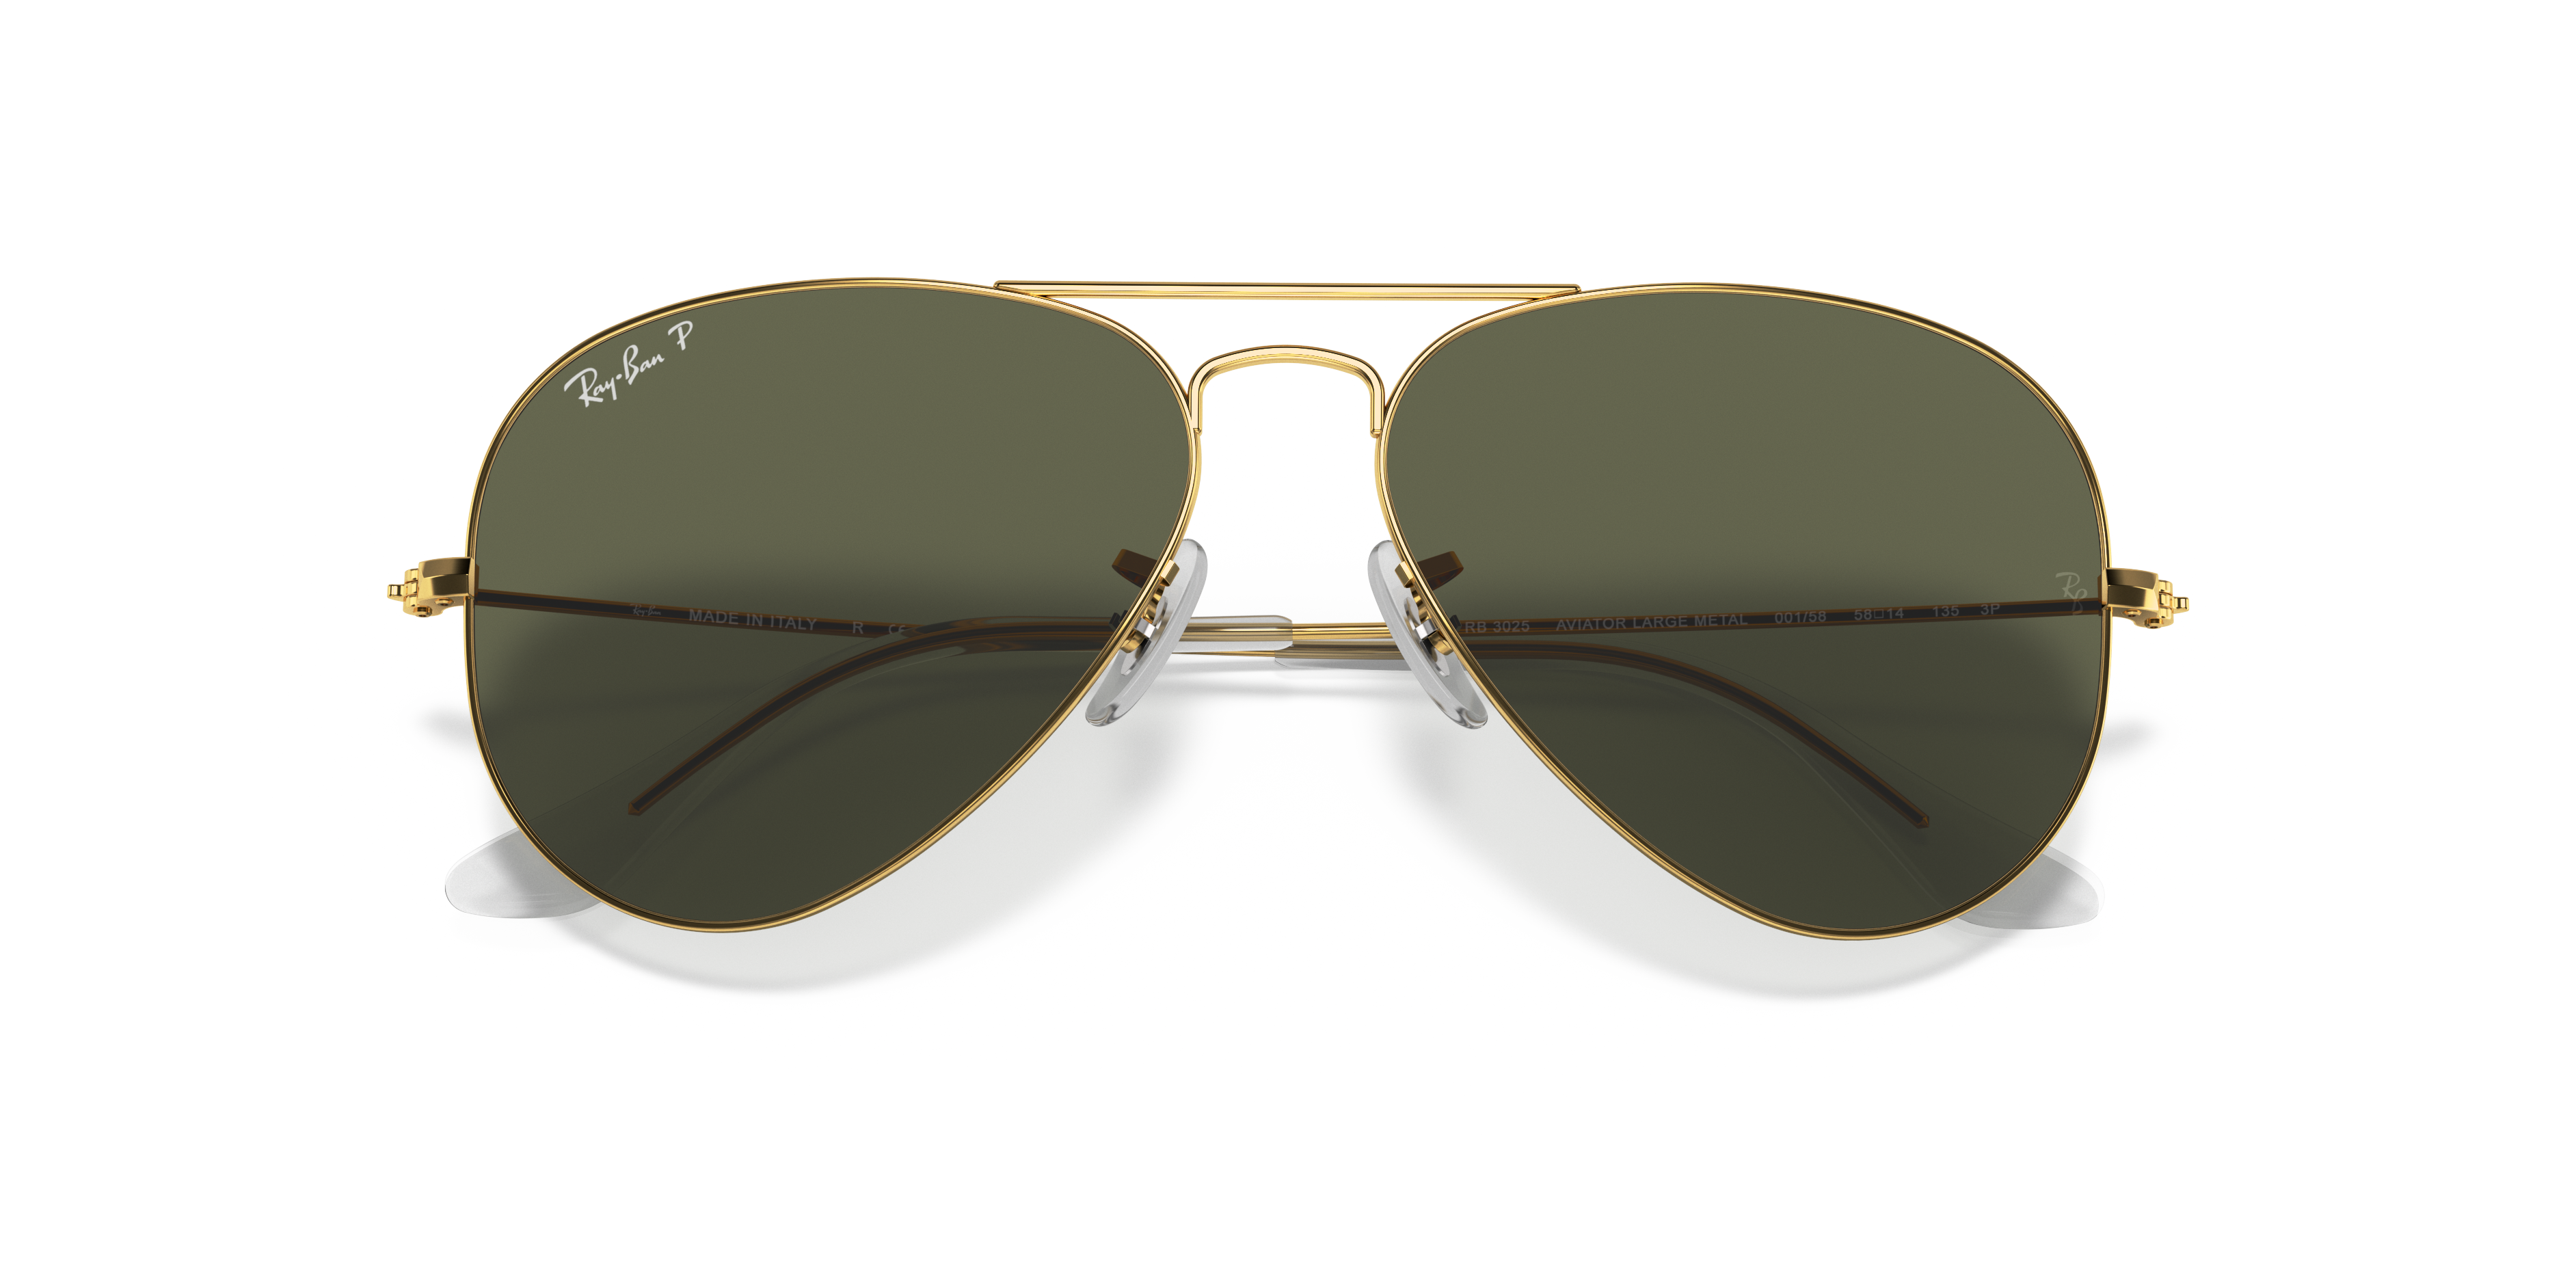 Save 59% Womens Mens Accessories Mens Sunglasses Ray-Ban Rb3025 Classic Pilot Sunglasses 